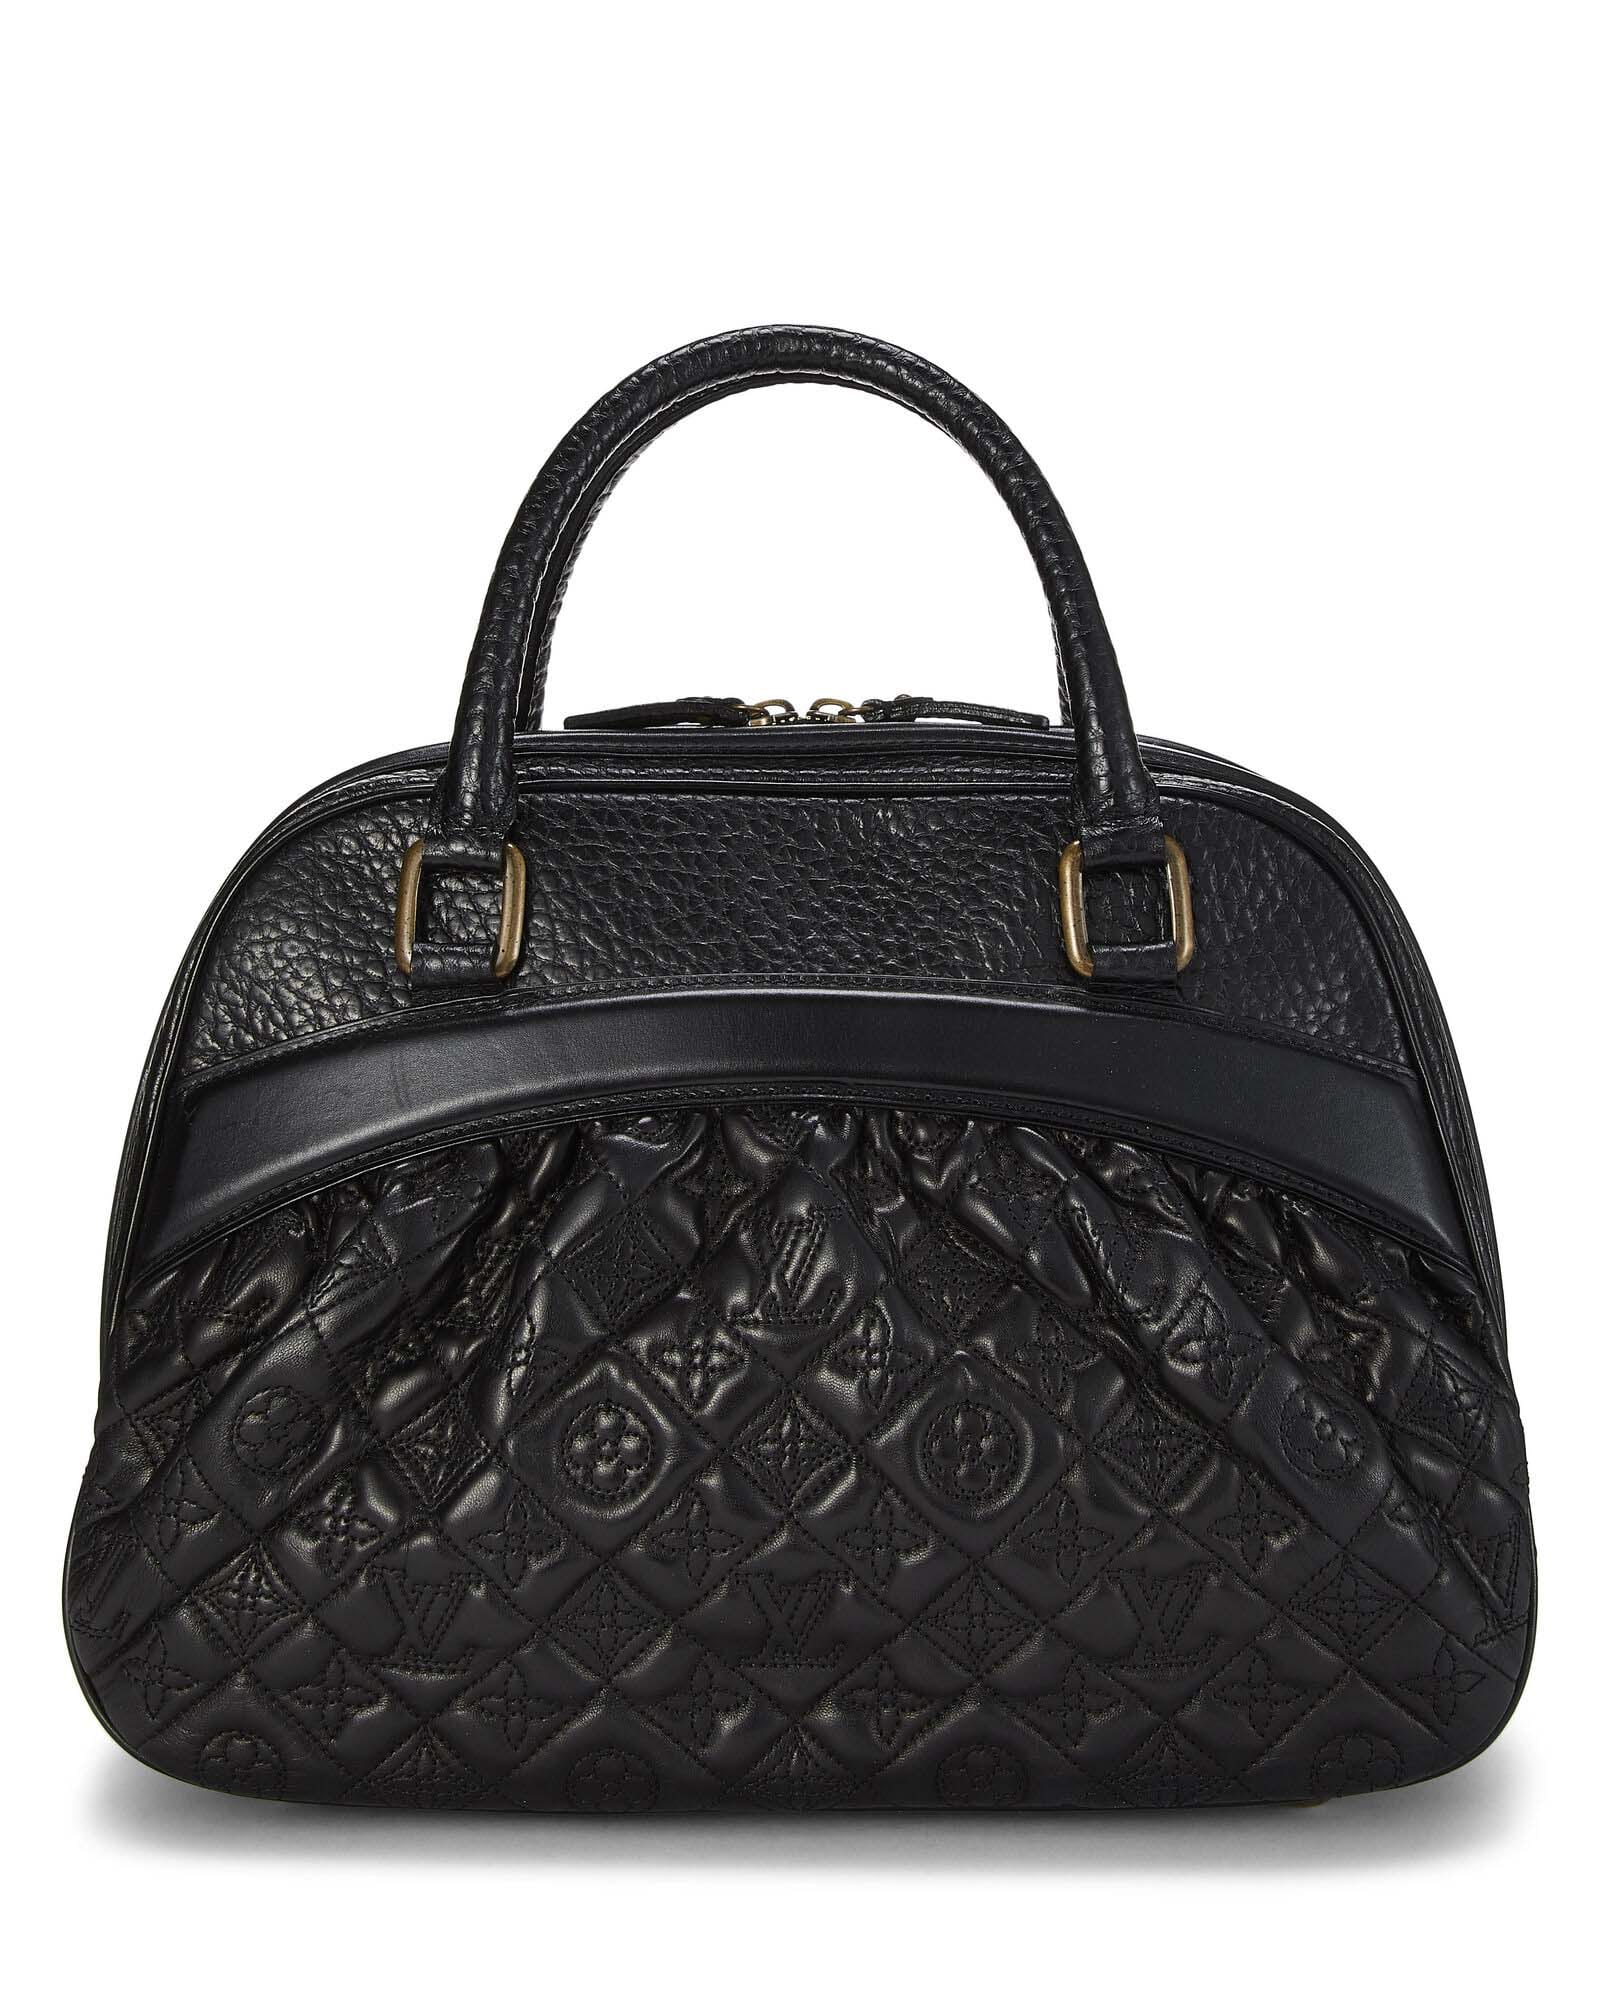 Louis Vuitton Black Monogram Leather Slip on Loafers Size 36.5